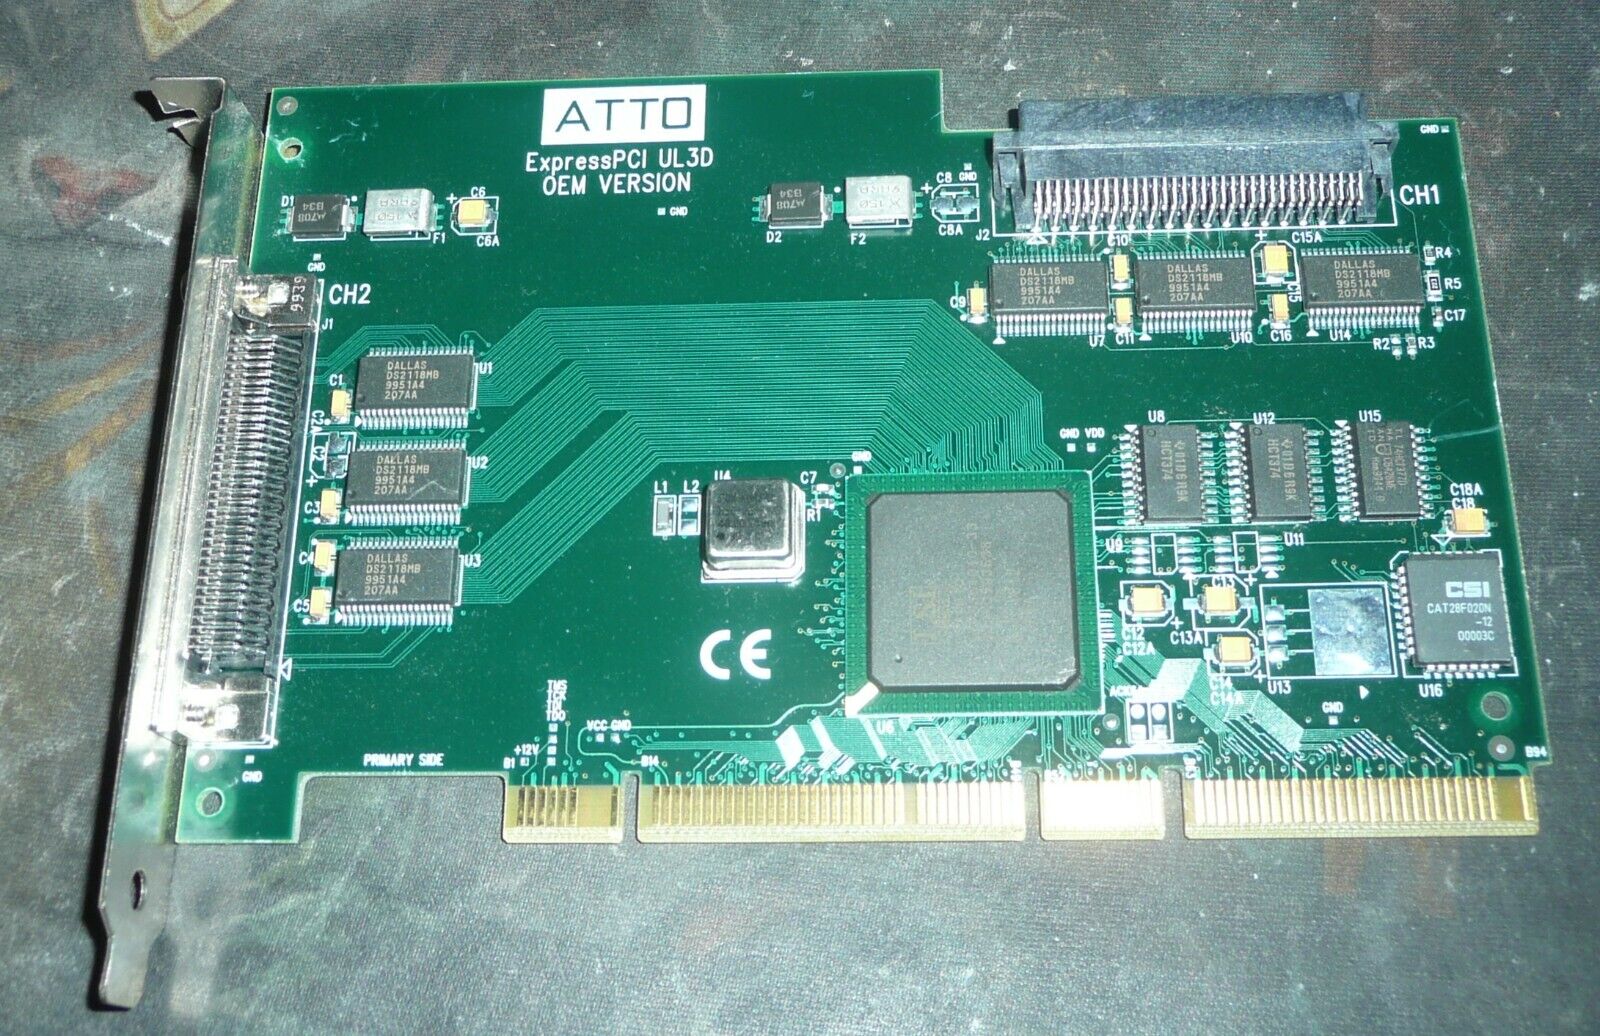 ATTO ExpressPCI UL3D Host Dual Channel SCSI PCI-X Controller Card OEM VERSION